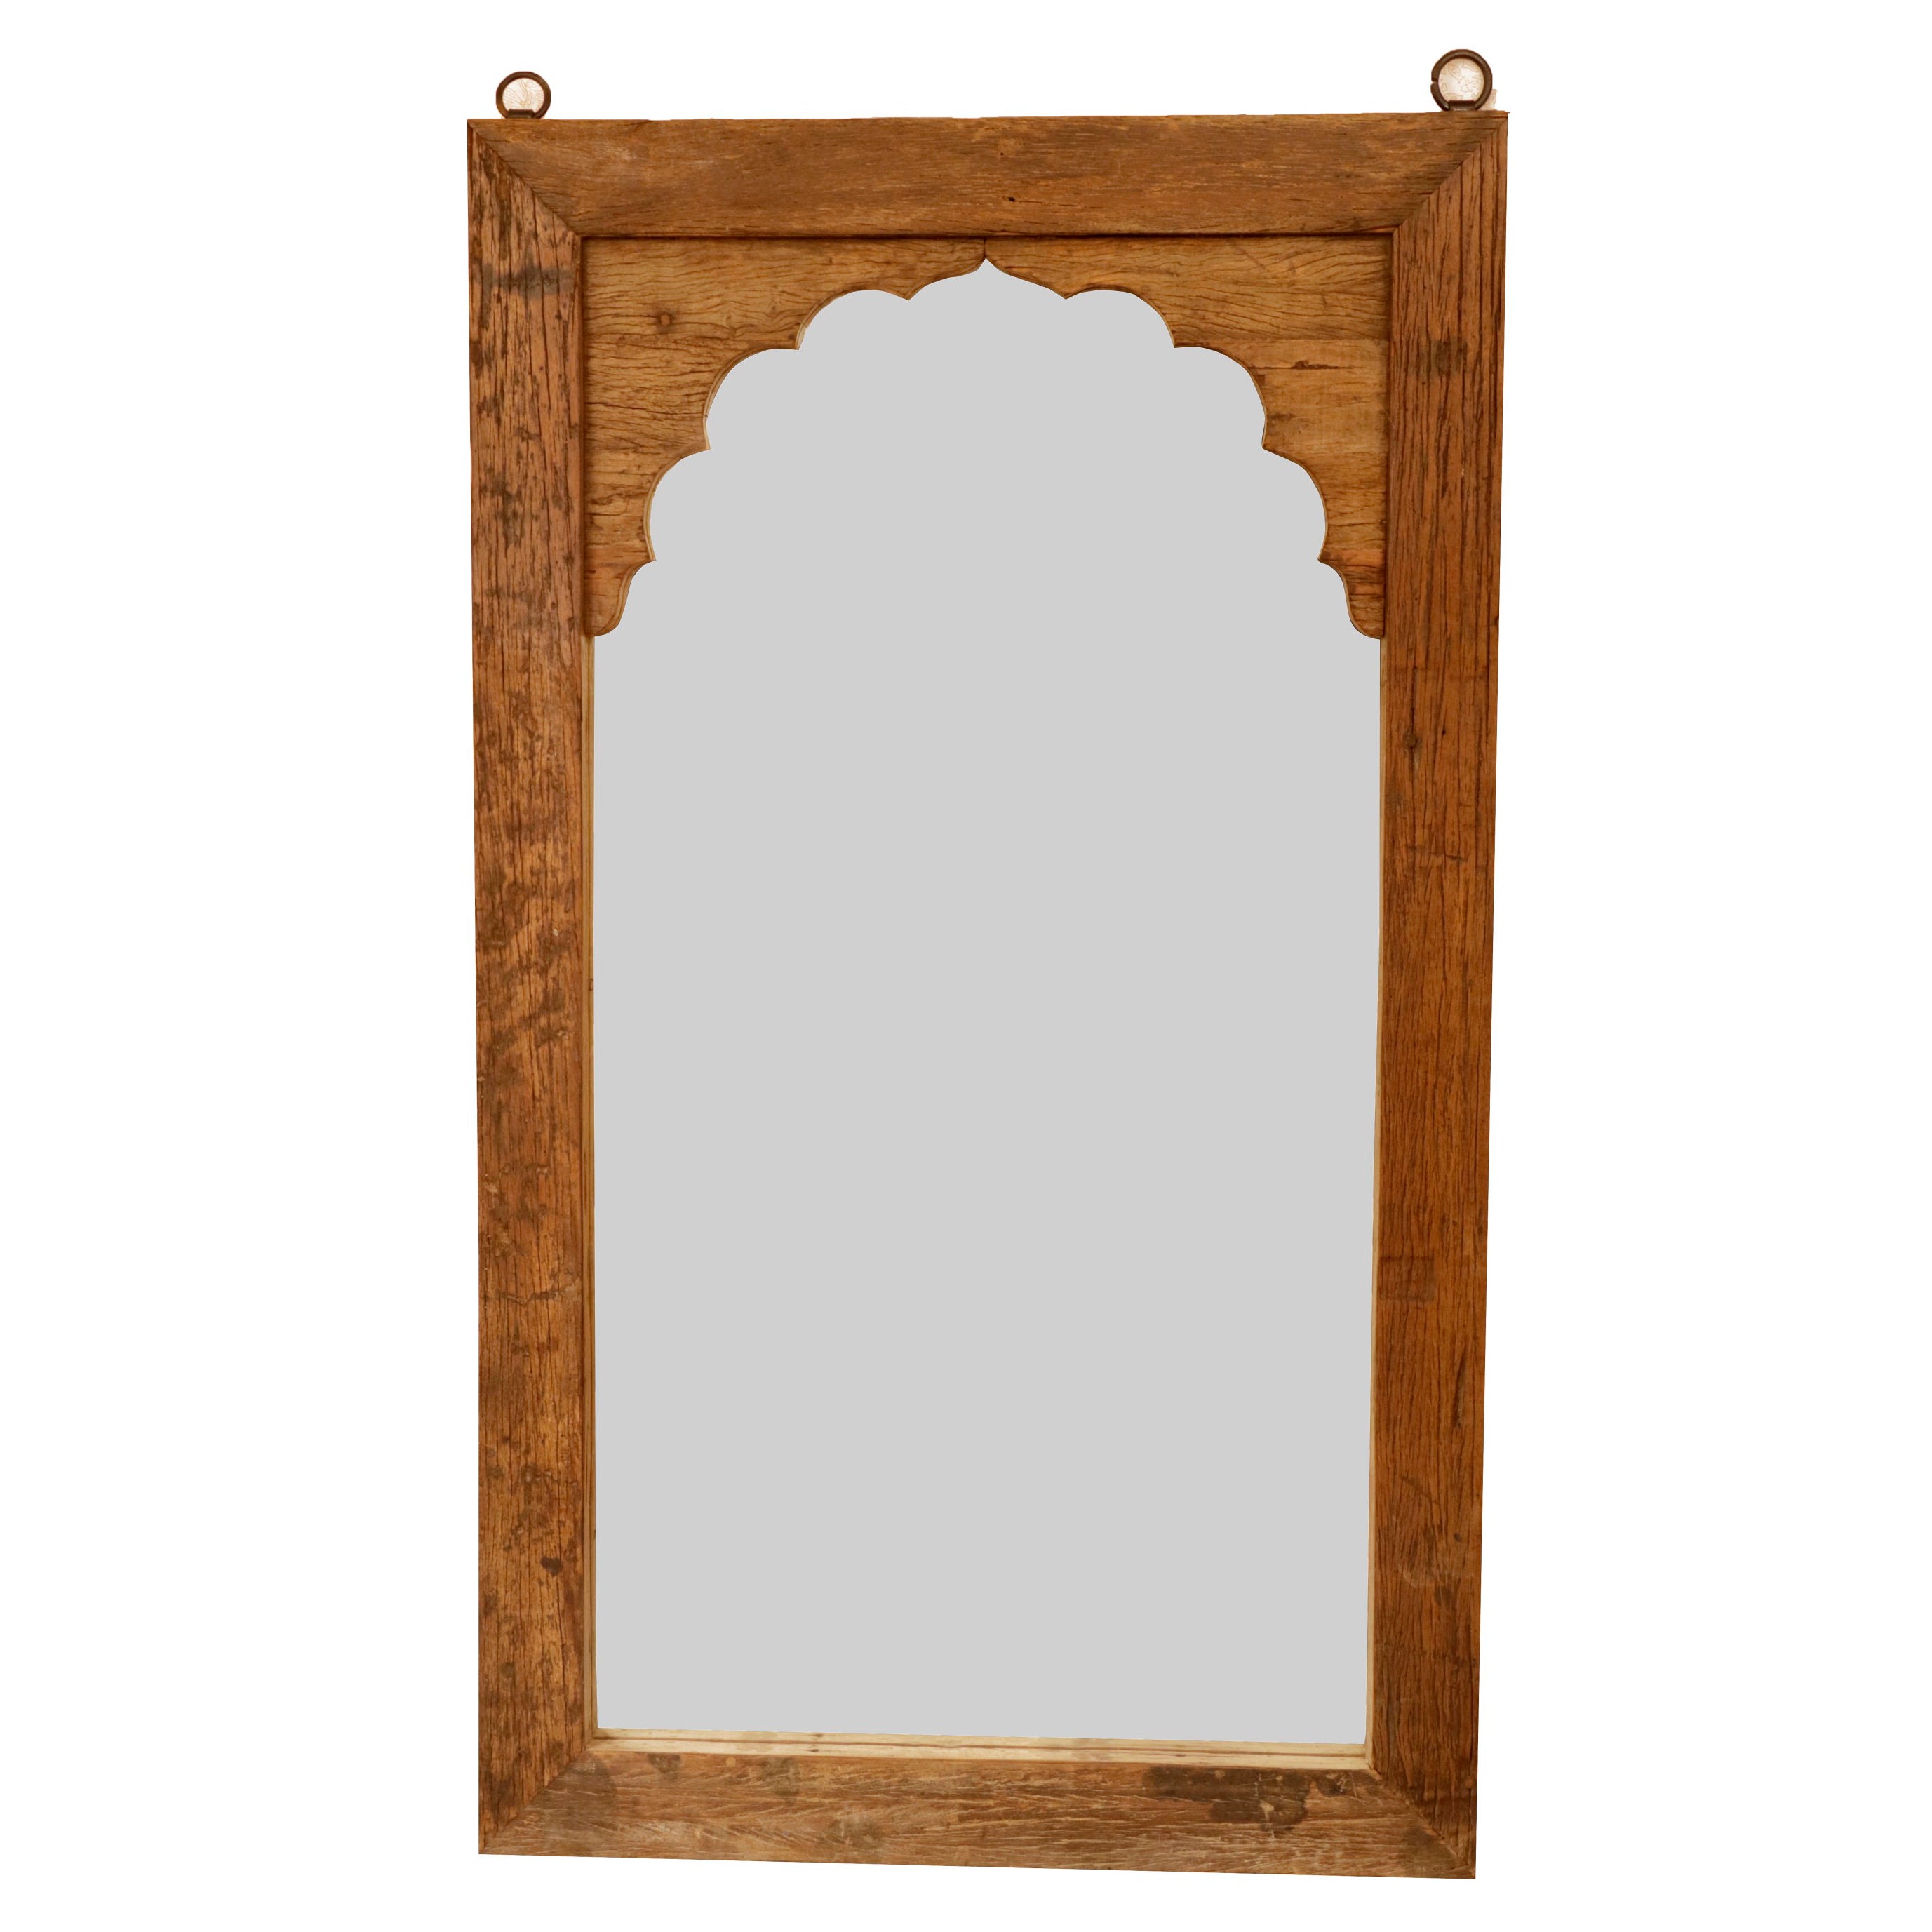 Solid Hertiage wood Rustic Mirror Mirror